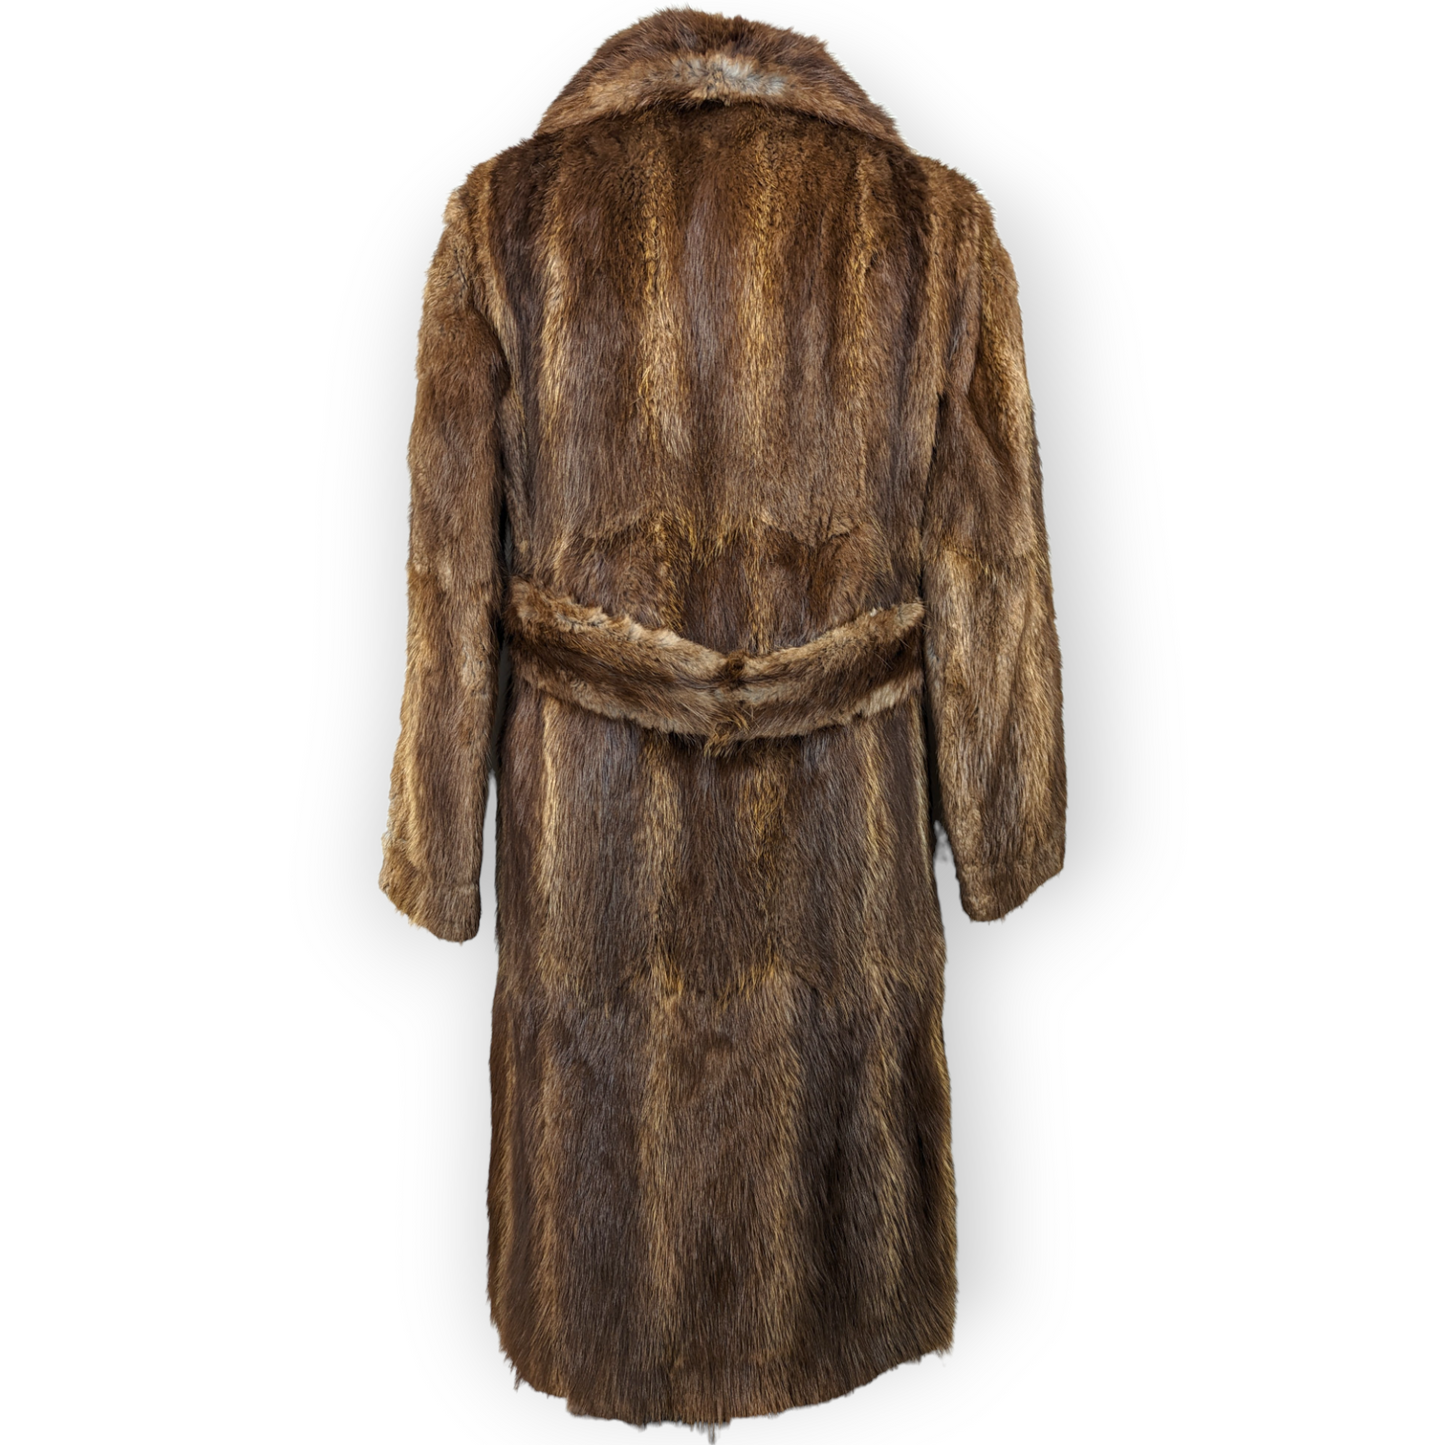 David Vard Vintage Ireland Dublin Brown Real Fur Coat Jacket Women Size Medium